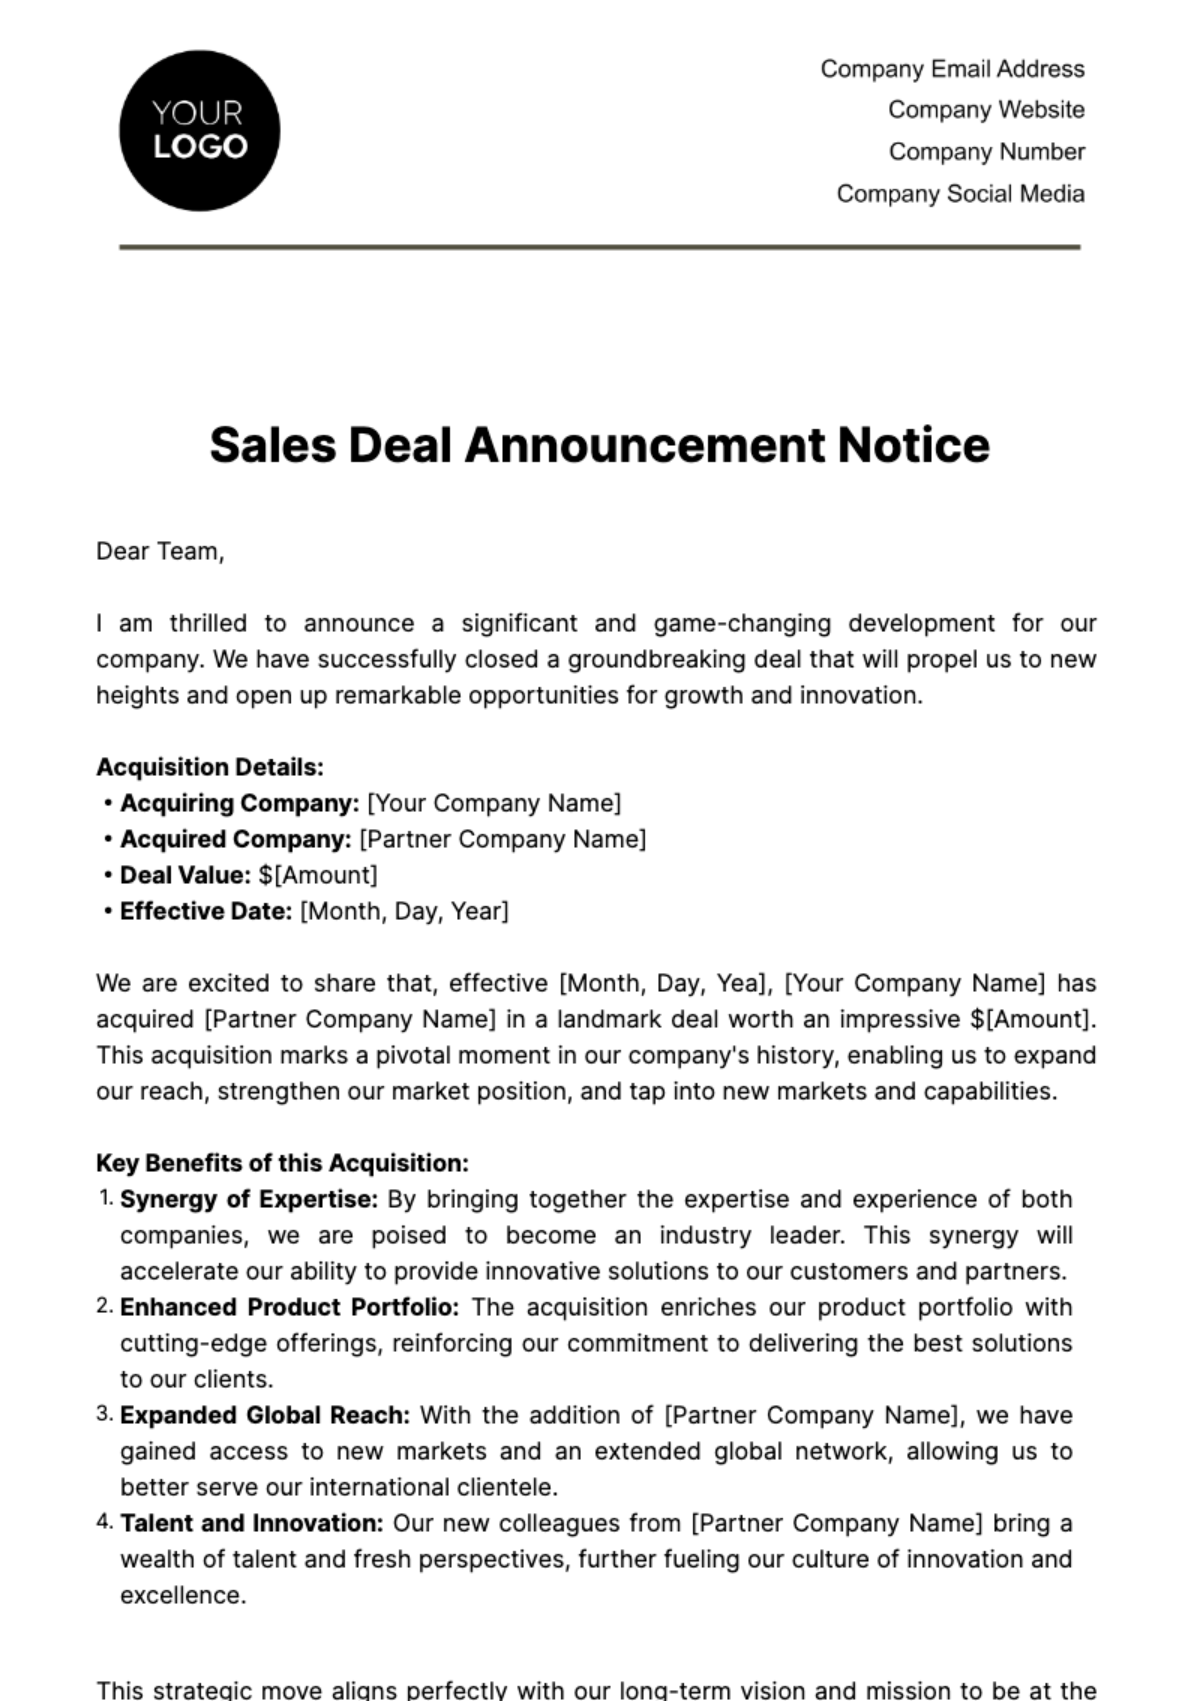 Sales Deal Announcement Notice Template